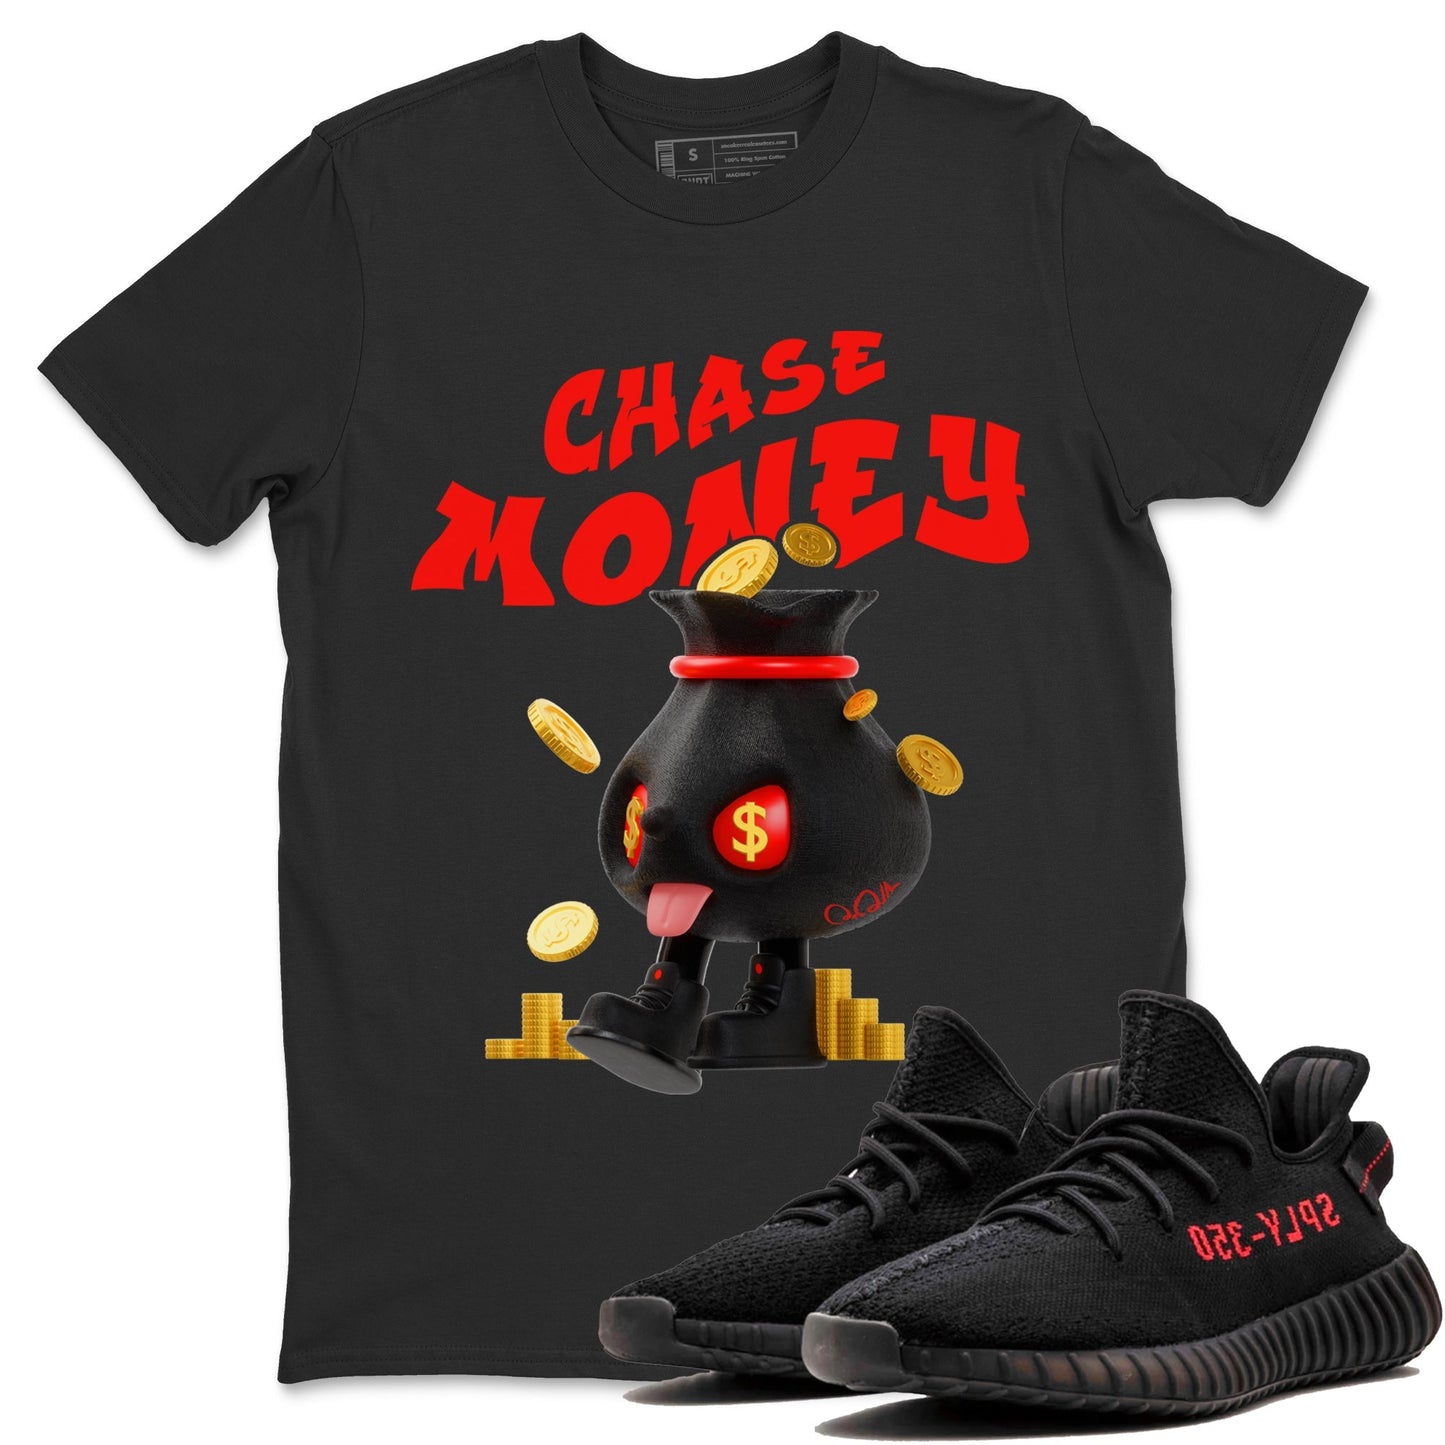 Yeezy 350 Bred shirt to match jordans Chase Money Streetwear Sneaker Shirt Adidas Yeezy 350 V2 Boost Bred Drip Gear Zone Sneaker Matching Clothing Unisex Black 1 T-Shirt